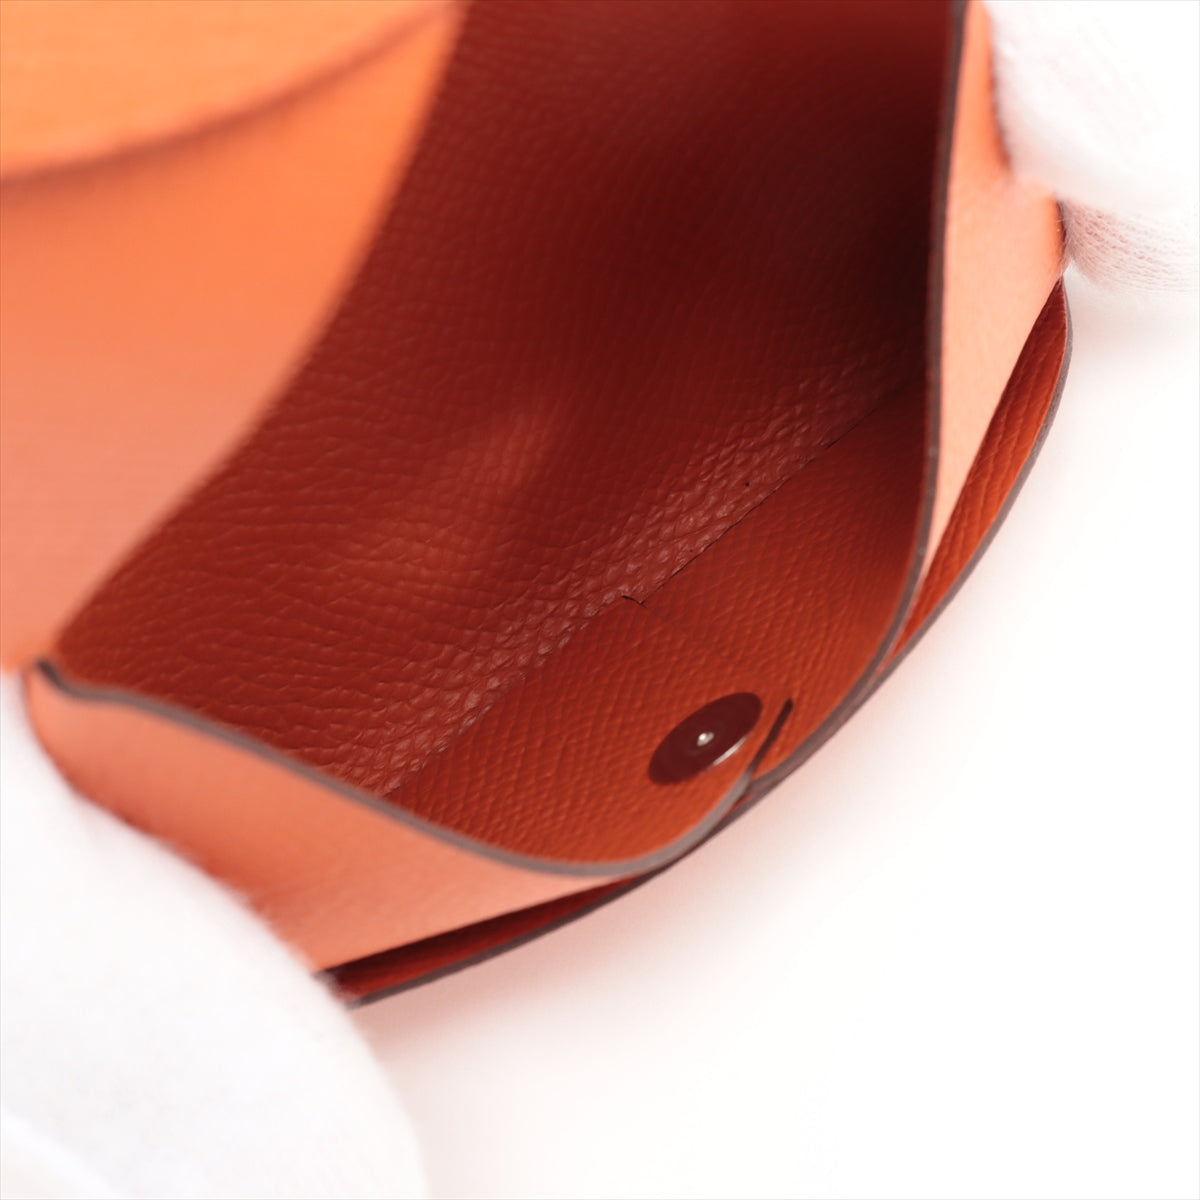 Hermès Calvi Veau Epsom Card case Orange Silver Metal fittings B: 2023